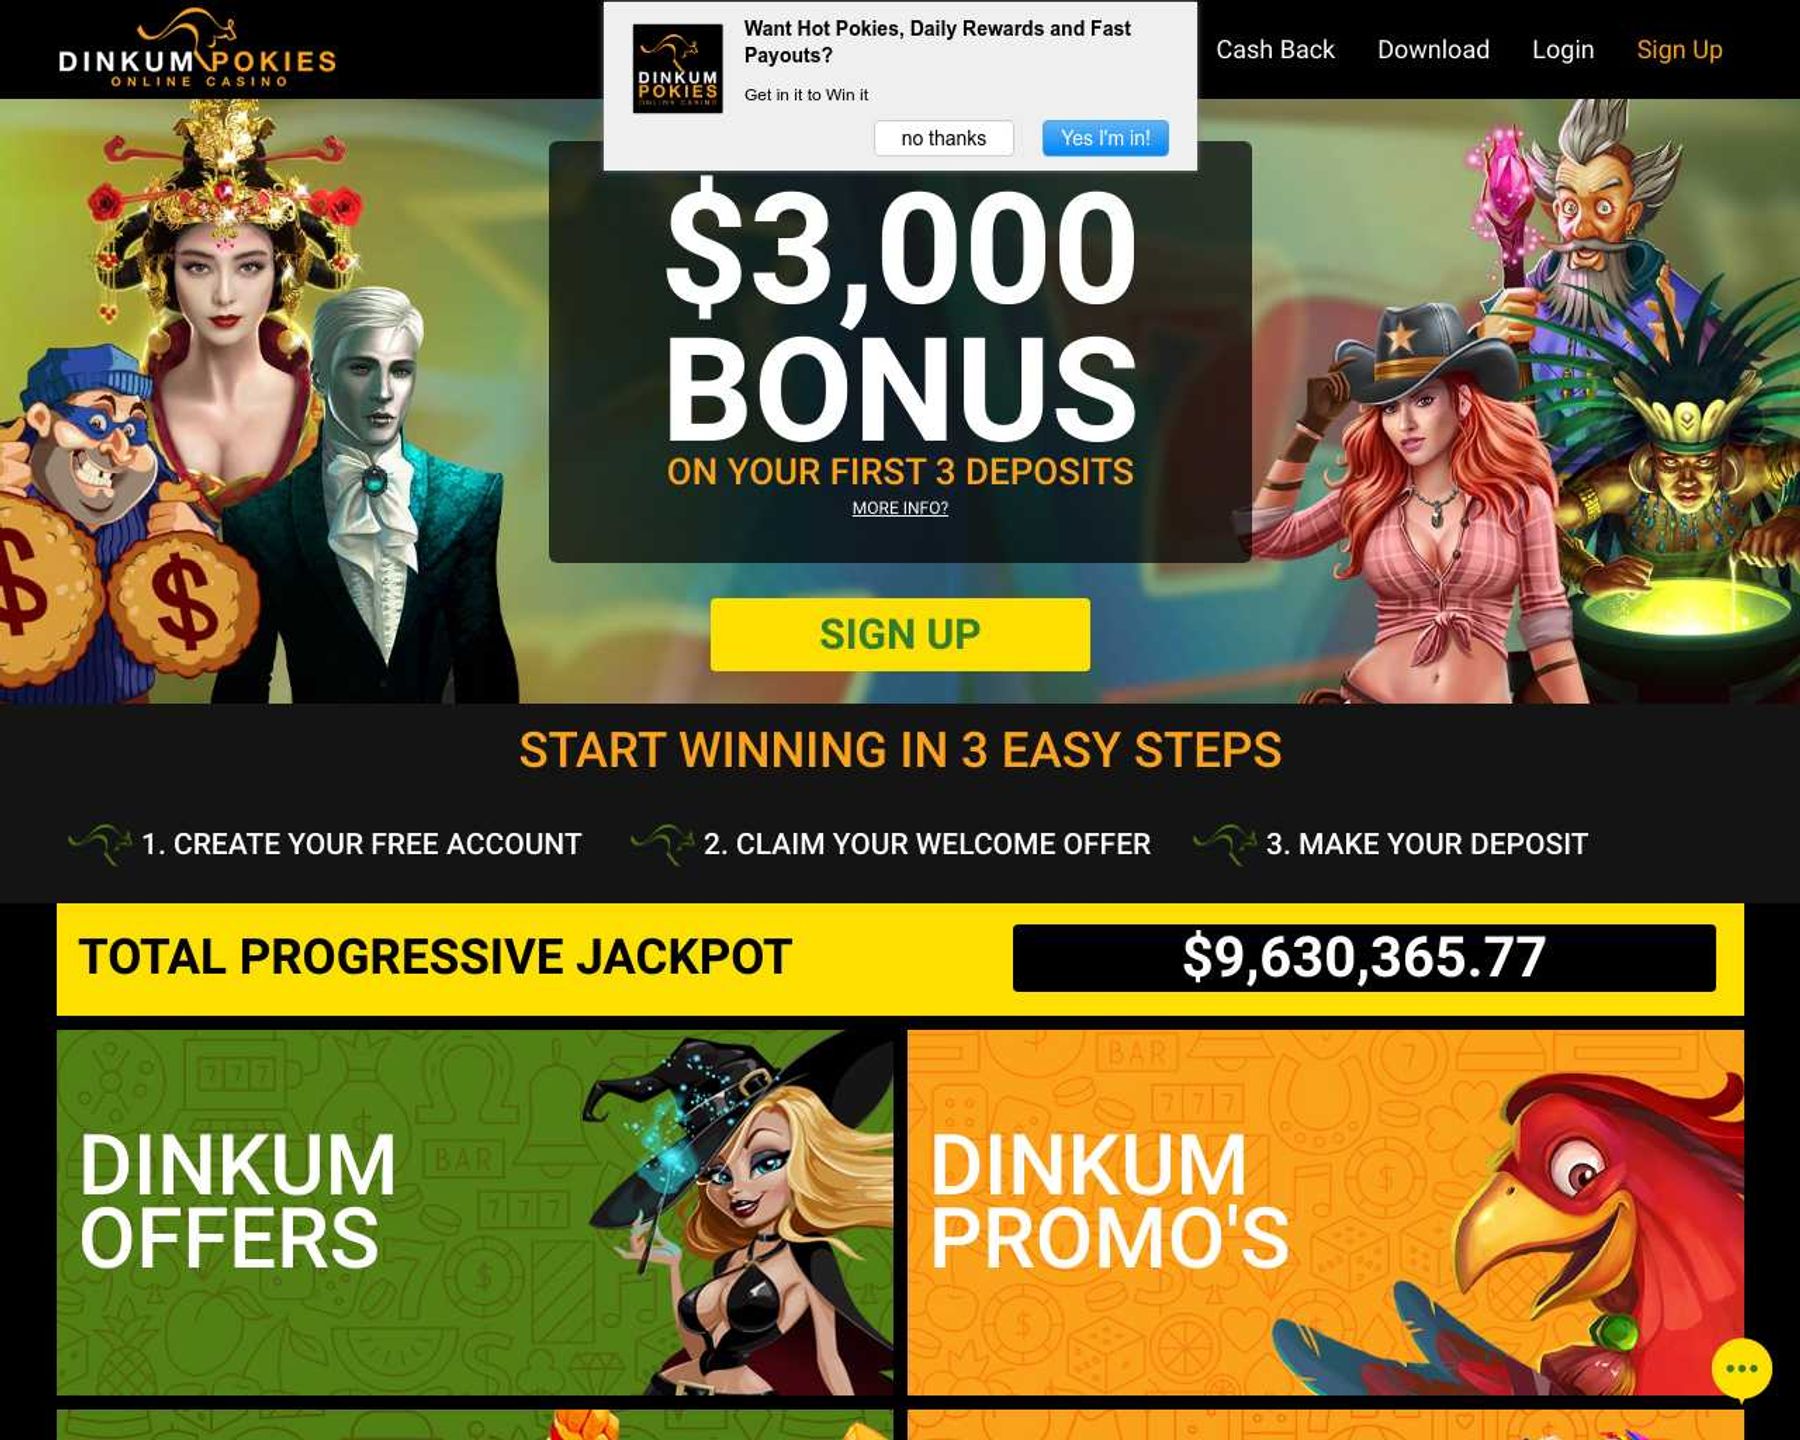 Dinkum pokies casino no deposit bonus